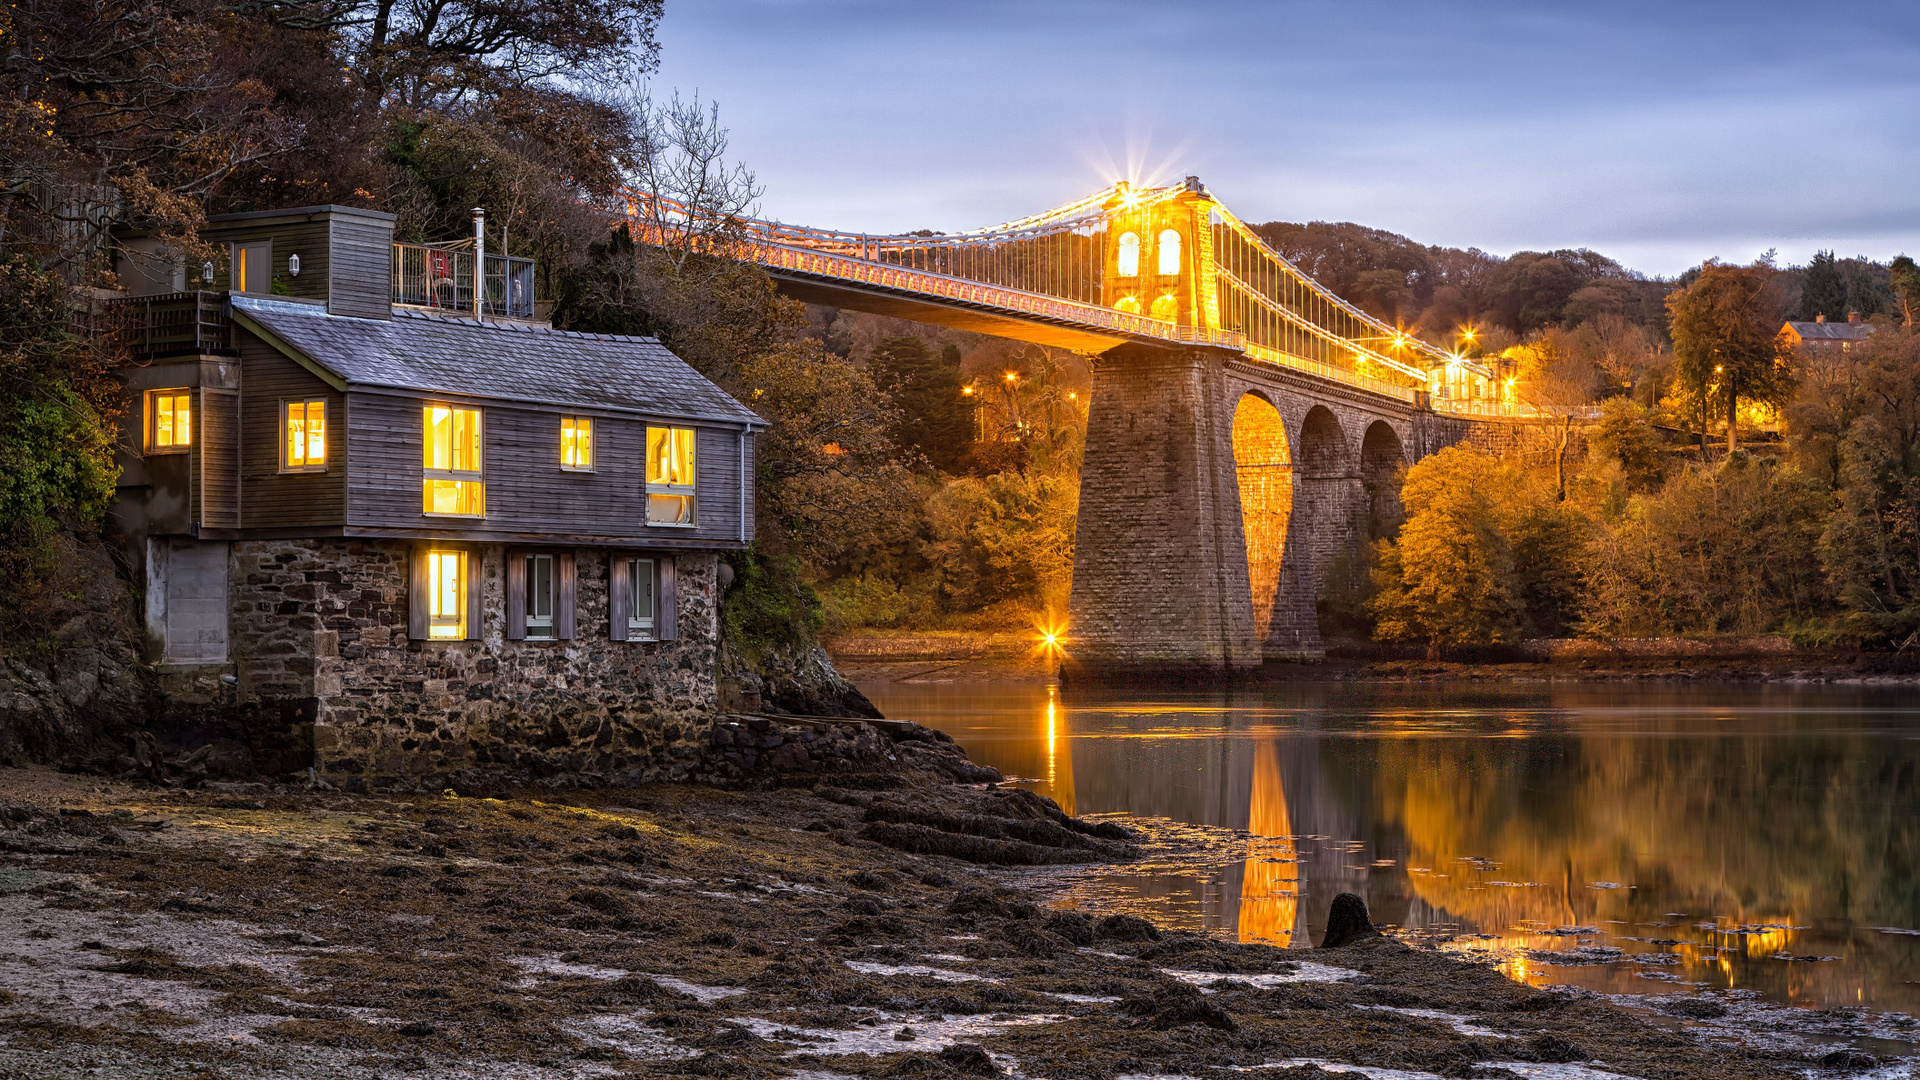 General 1920x1080 architecture bridge house trees stones river cabin lights reflection banks England UK